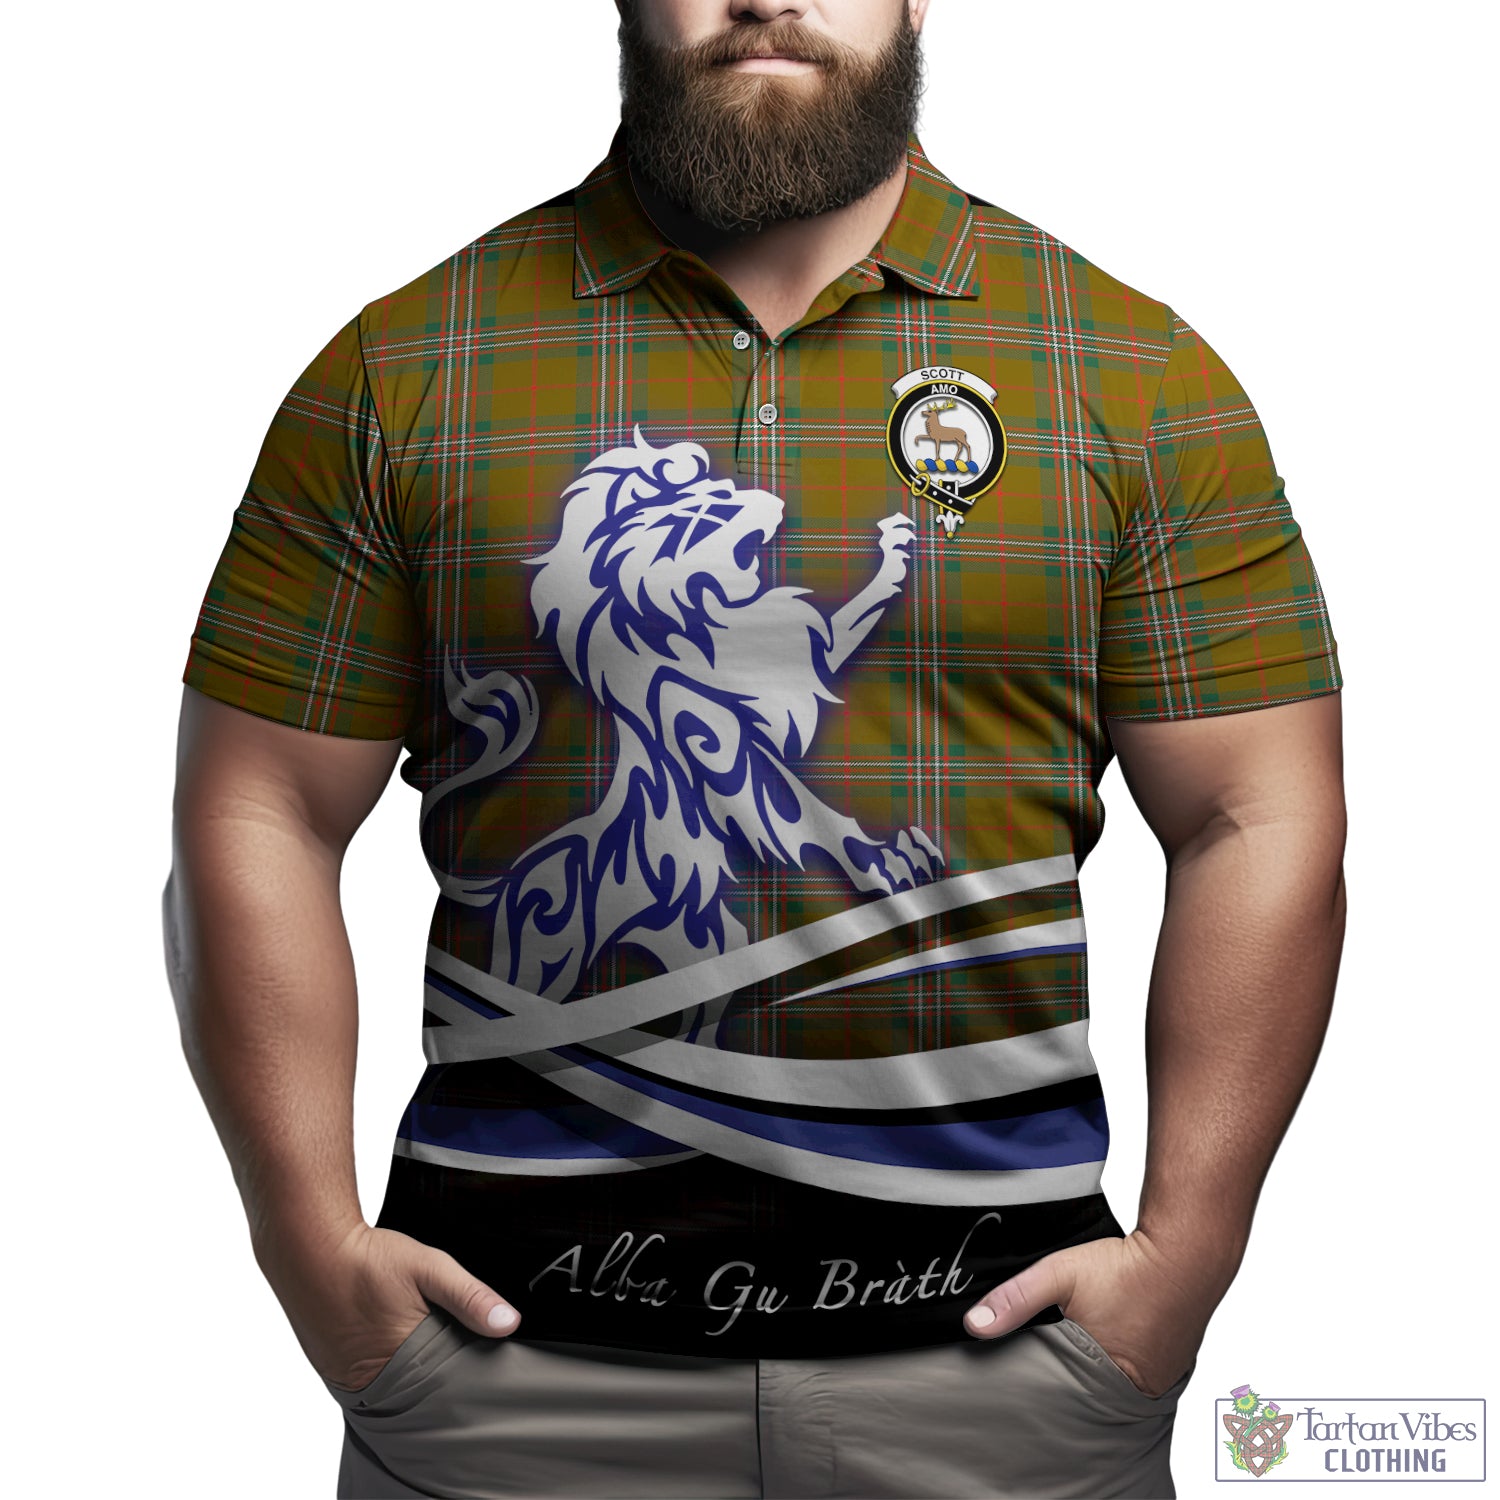 scott-brown-modern-tartan-polo-shirt-with-alba-gu-brath-regal-lion-emblem